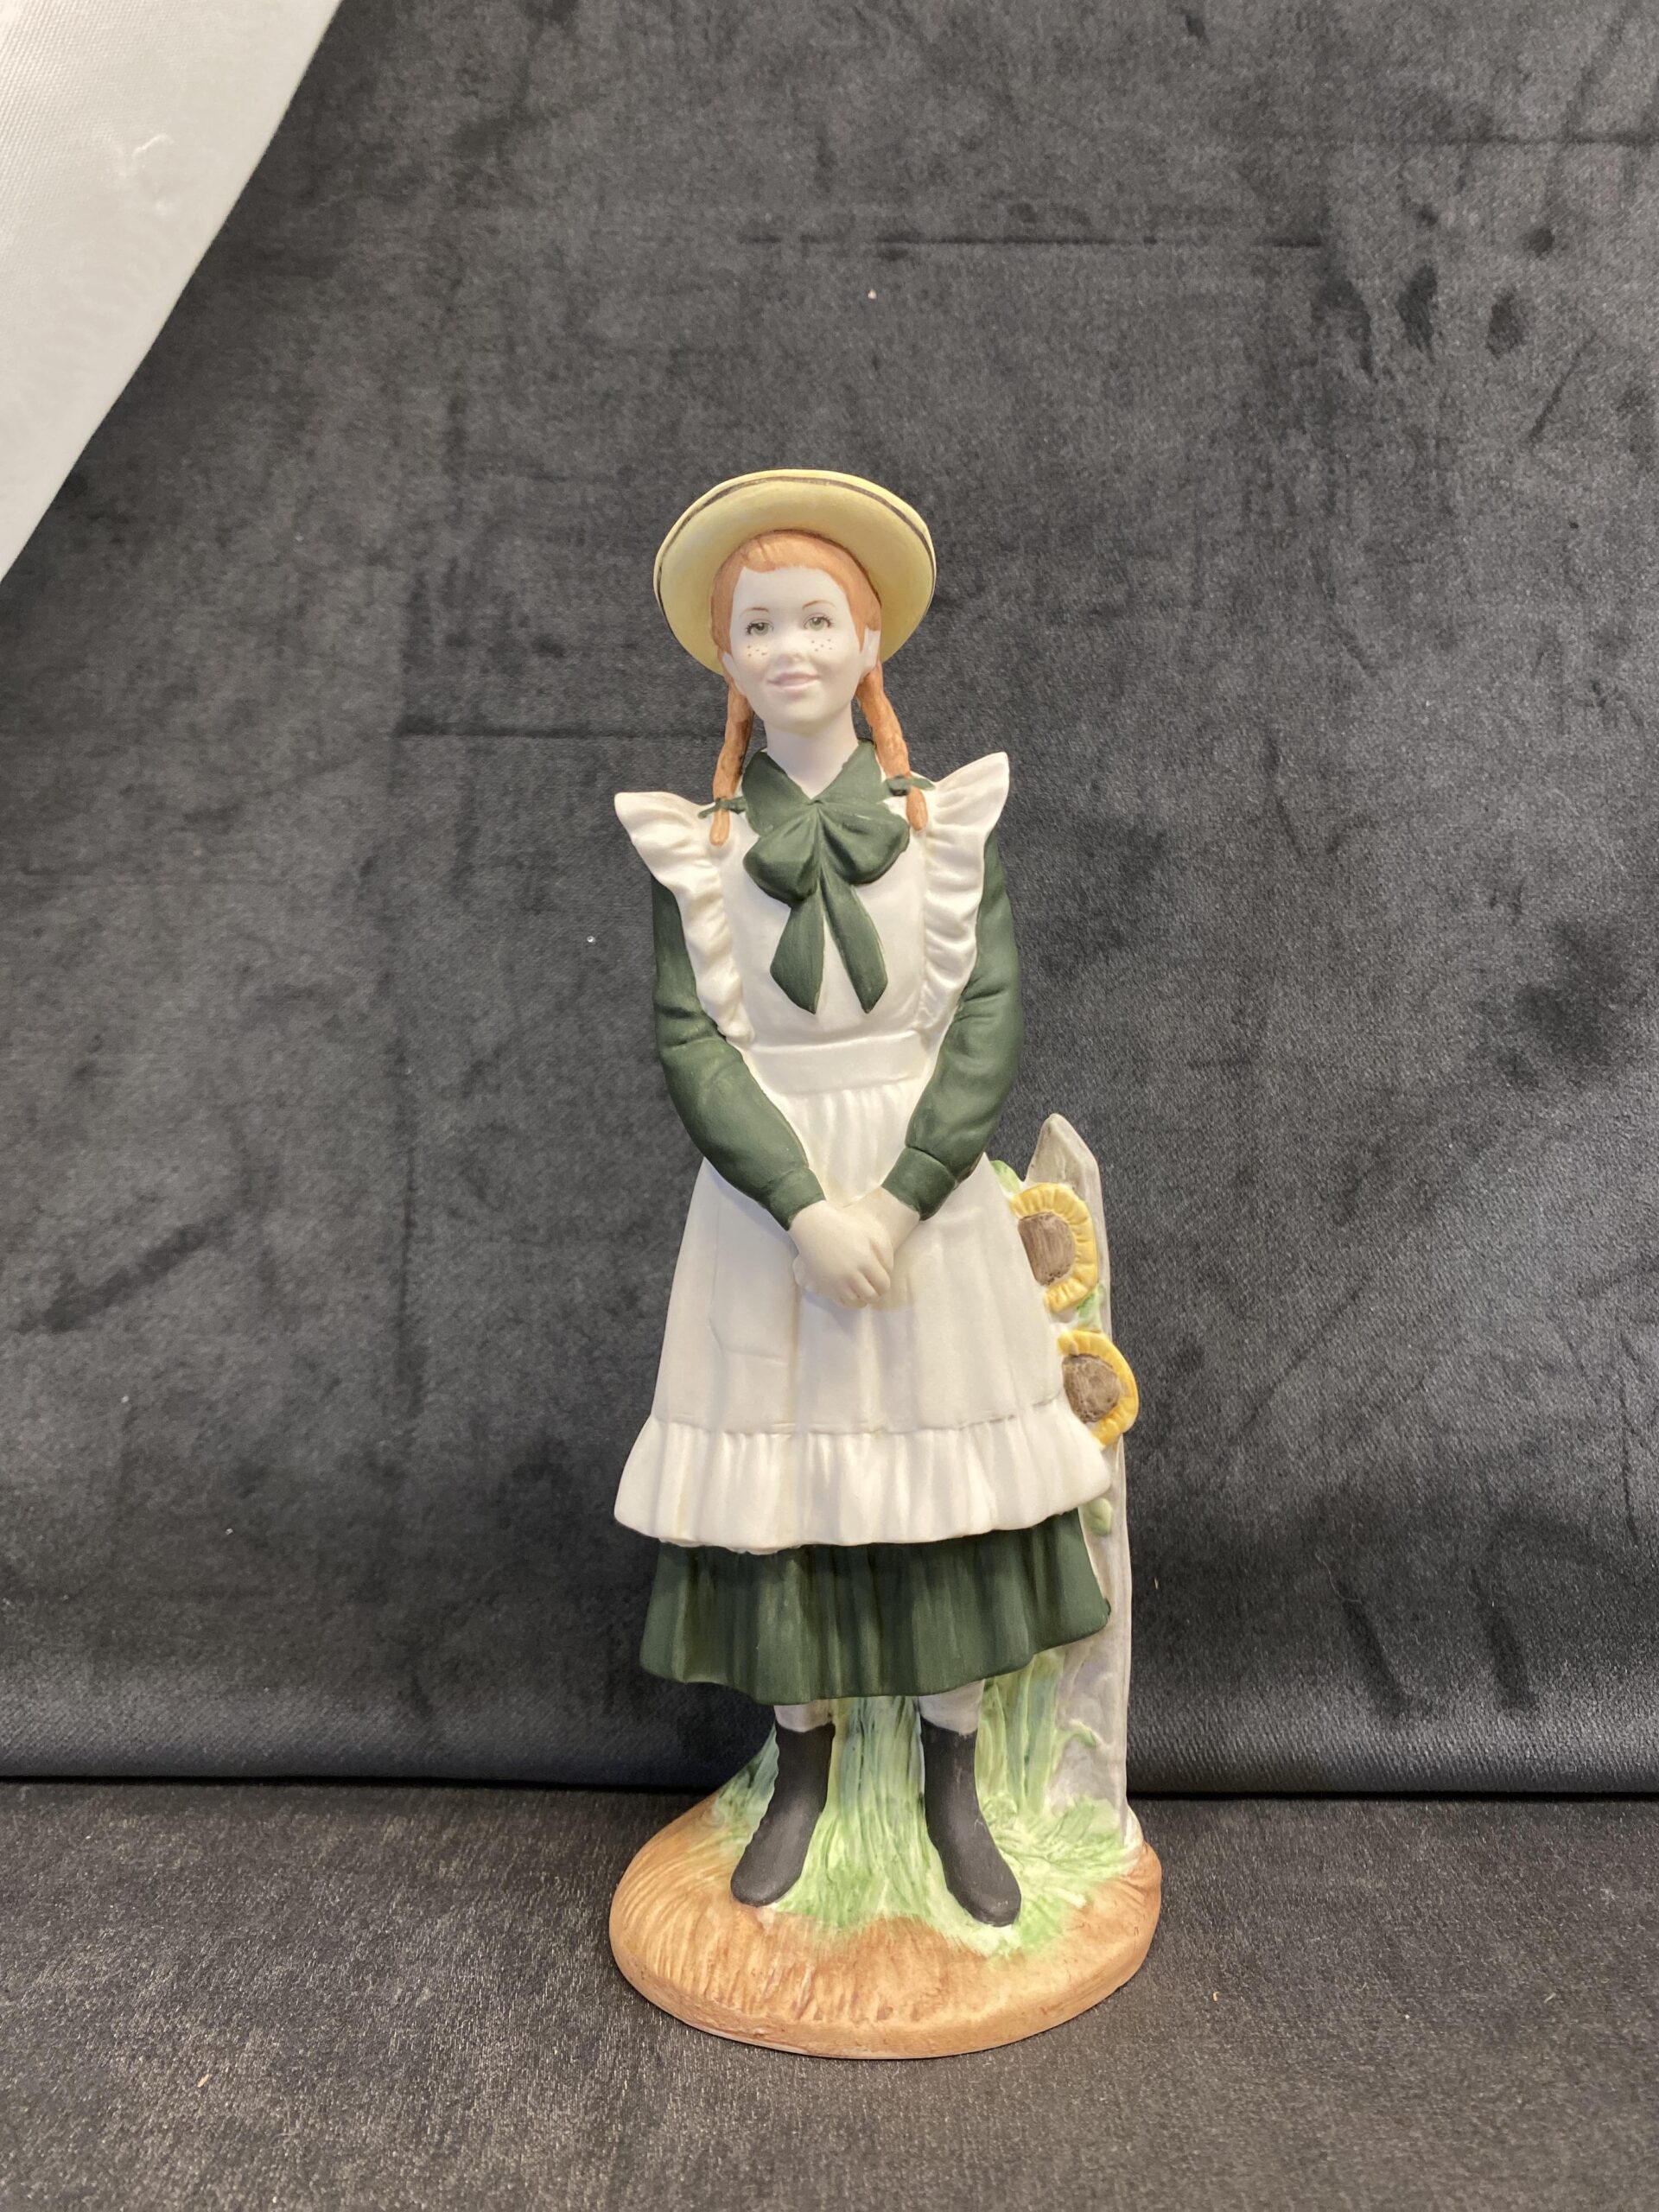 Coalport Figurine “Anne Of Green Gables”